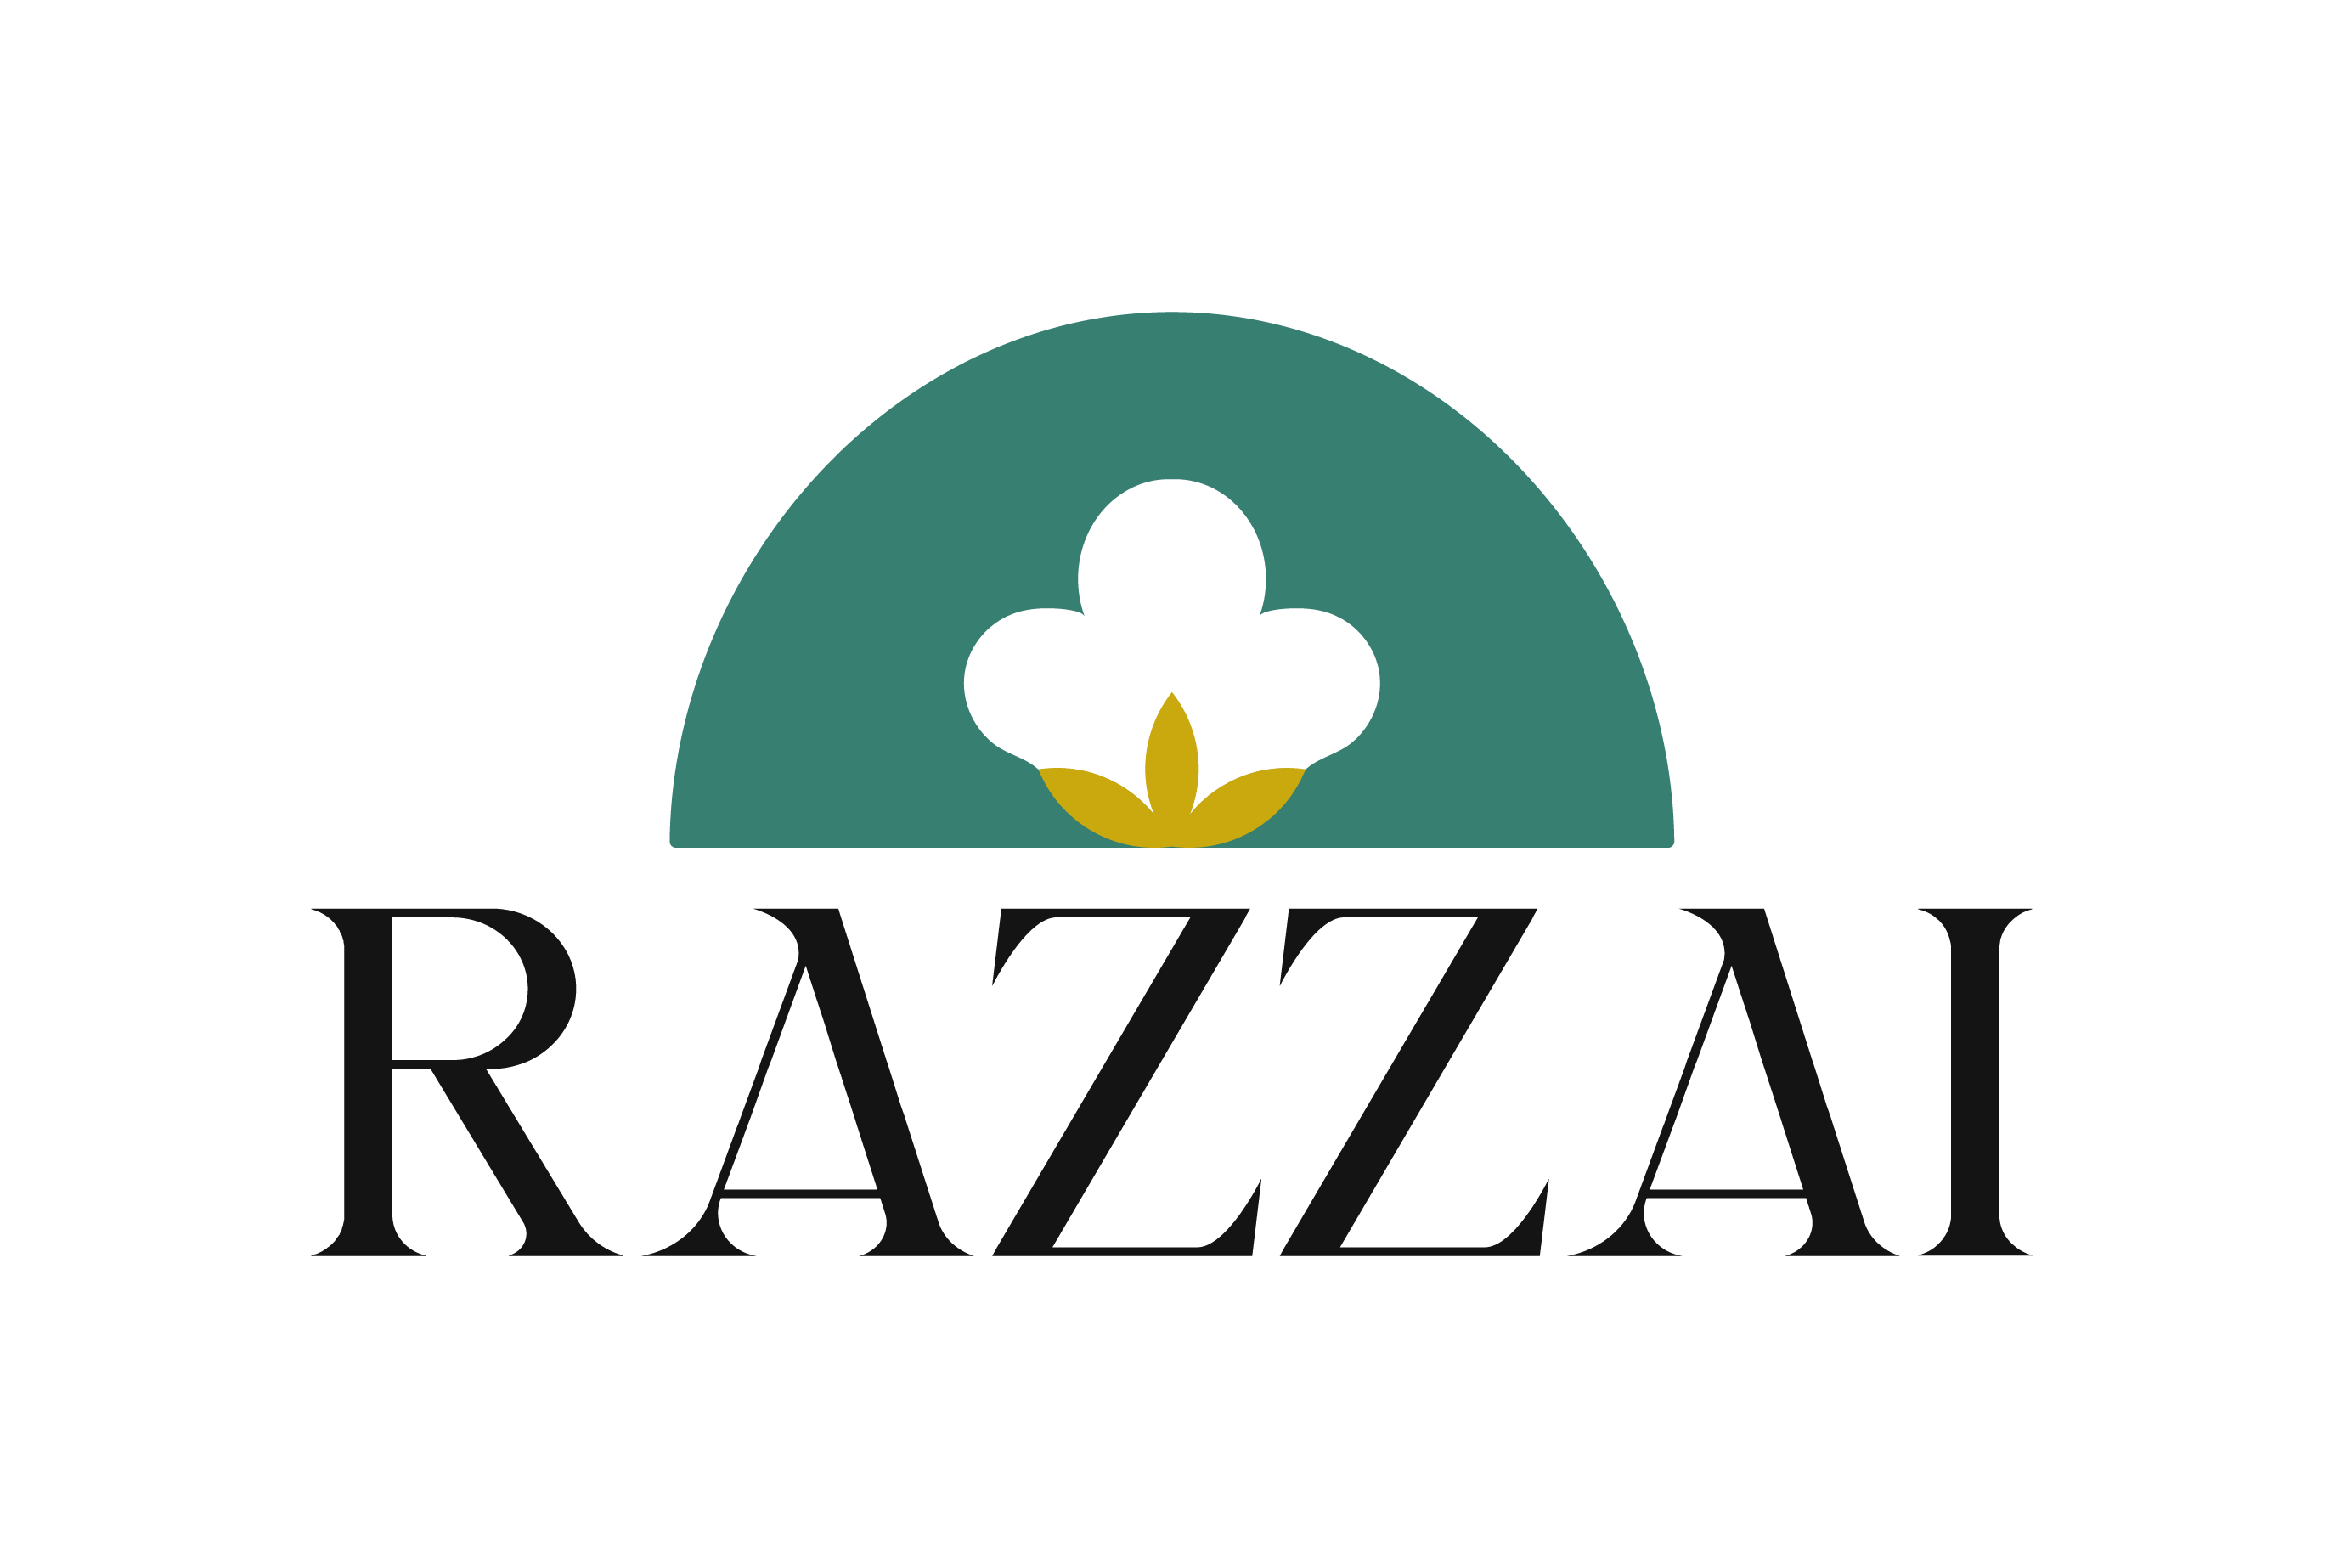 Razzaiworld.com